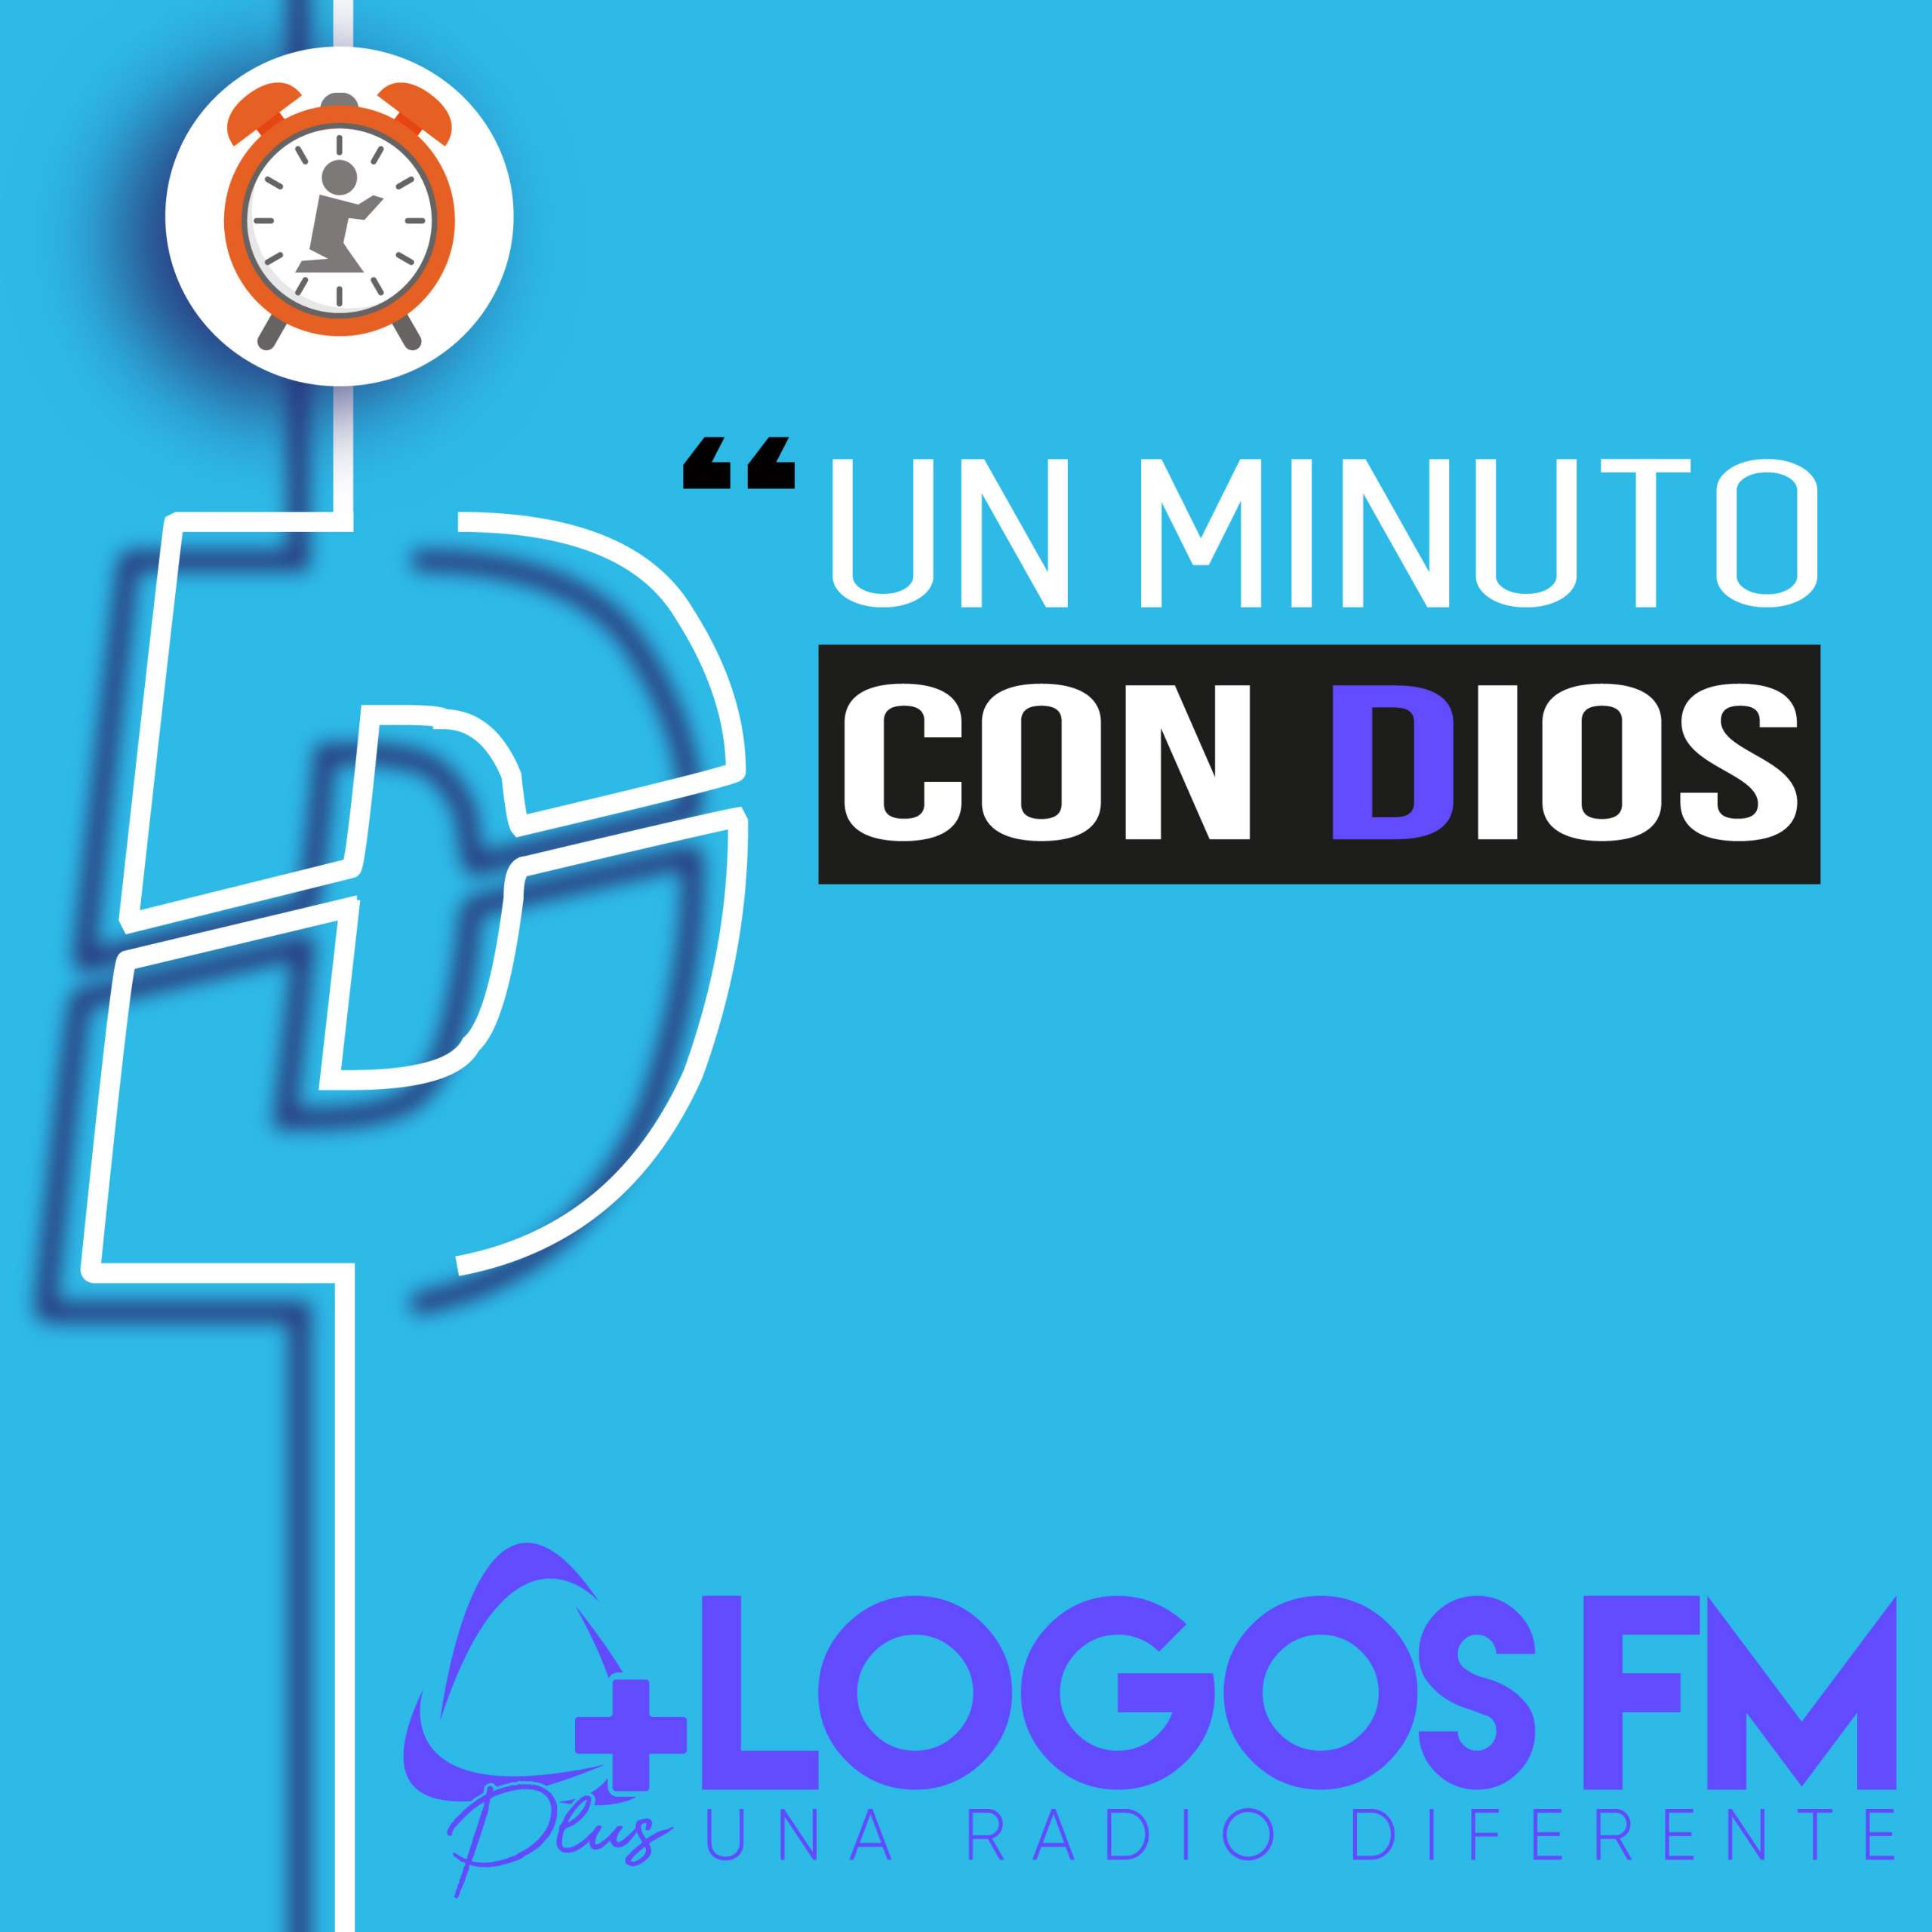 Un minuto con Dios - Episodio 363 - Juan José Ordoñez